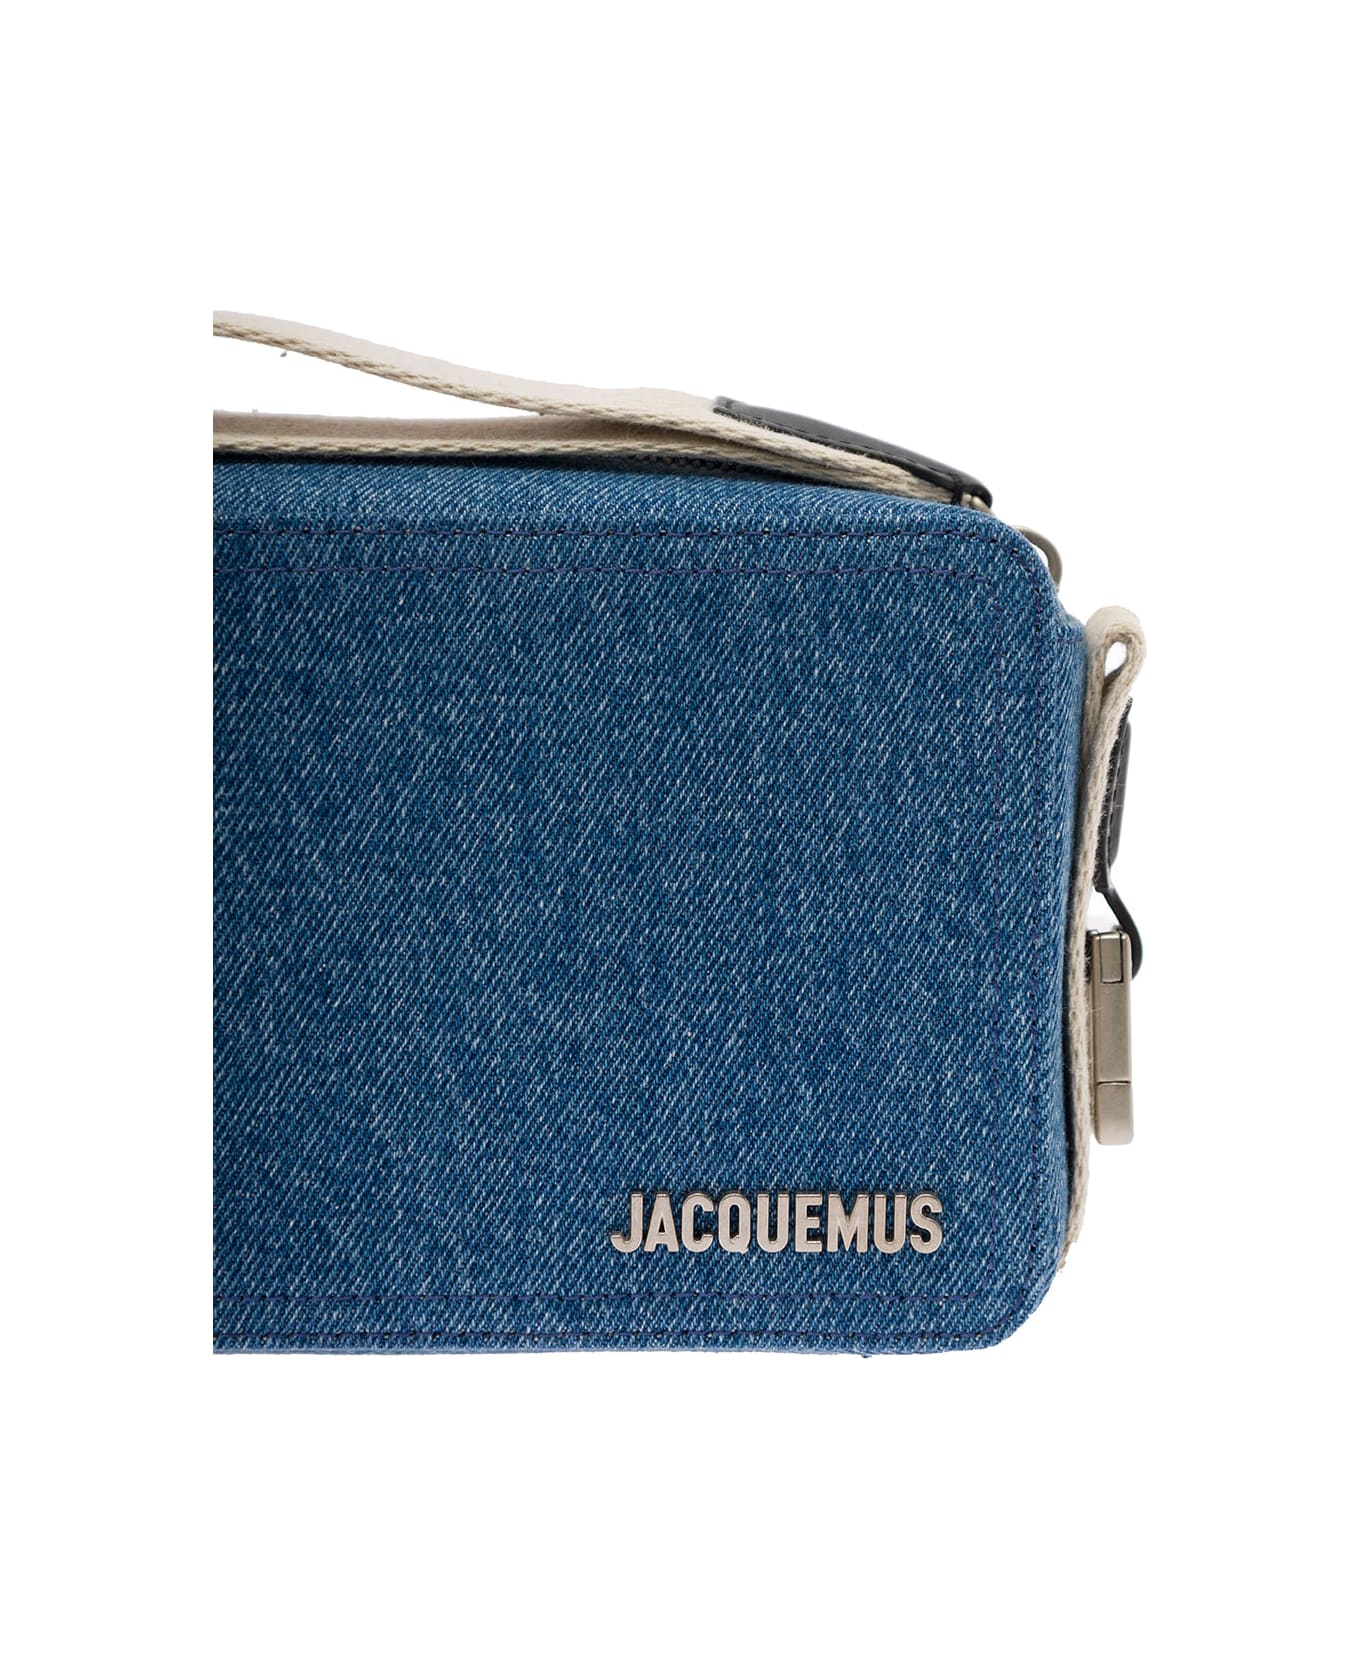 Jacquemus Denim Rectangle Bag - Blu トートバッグ